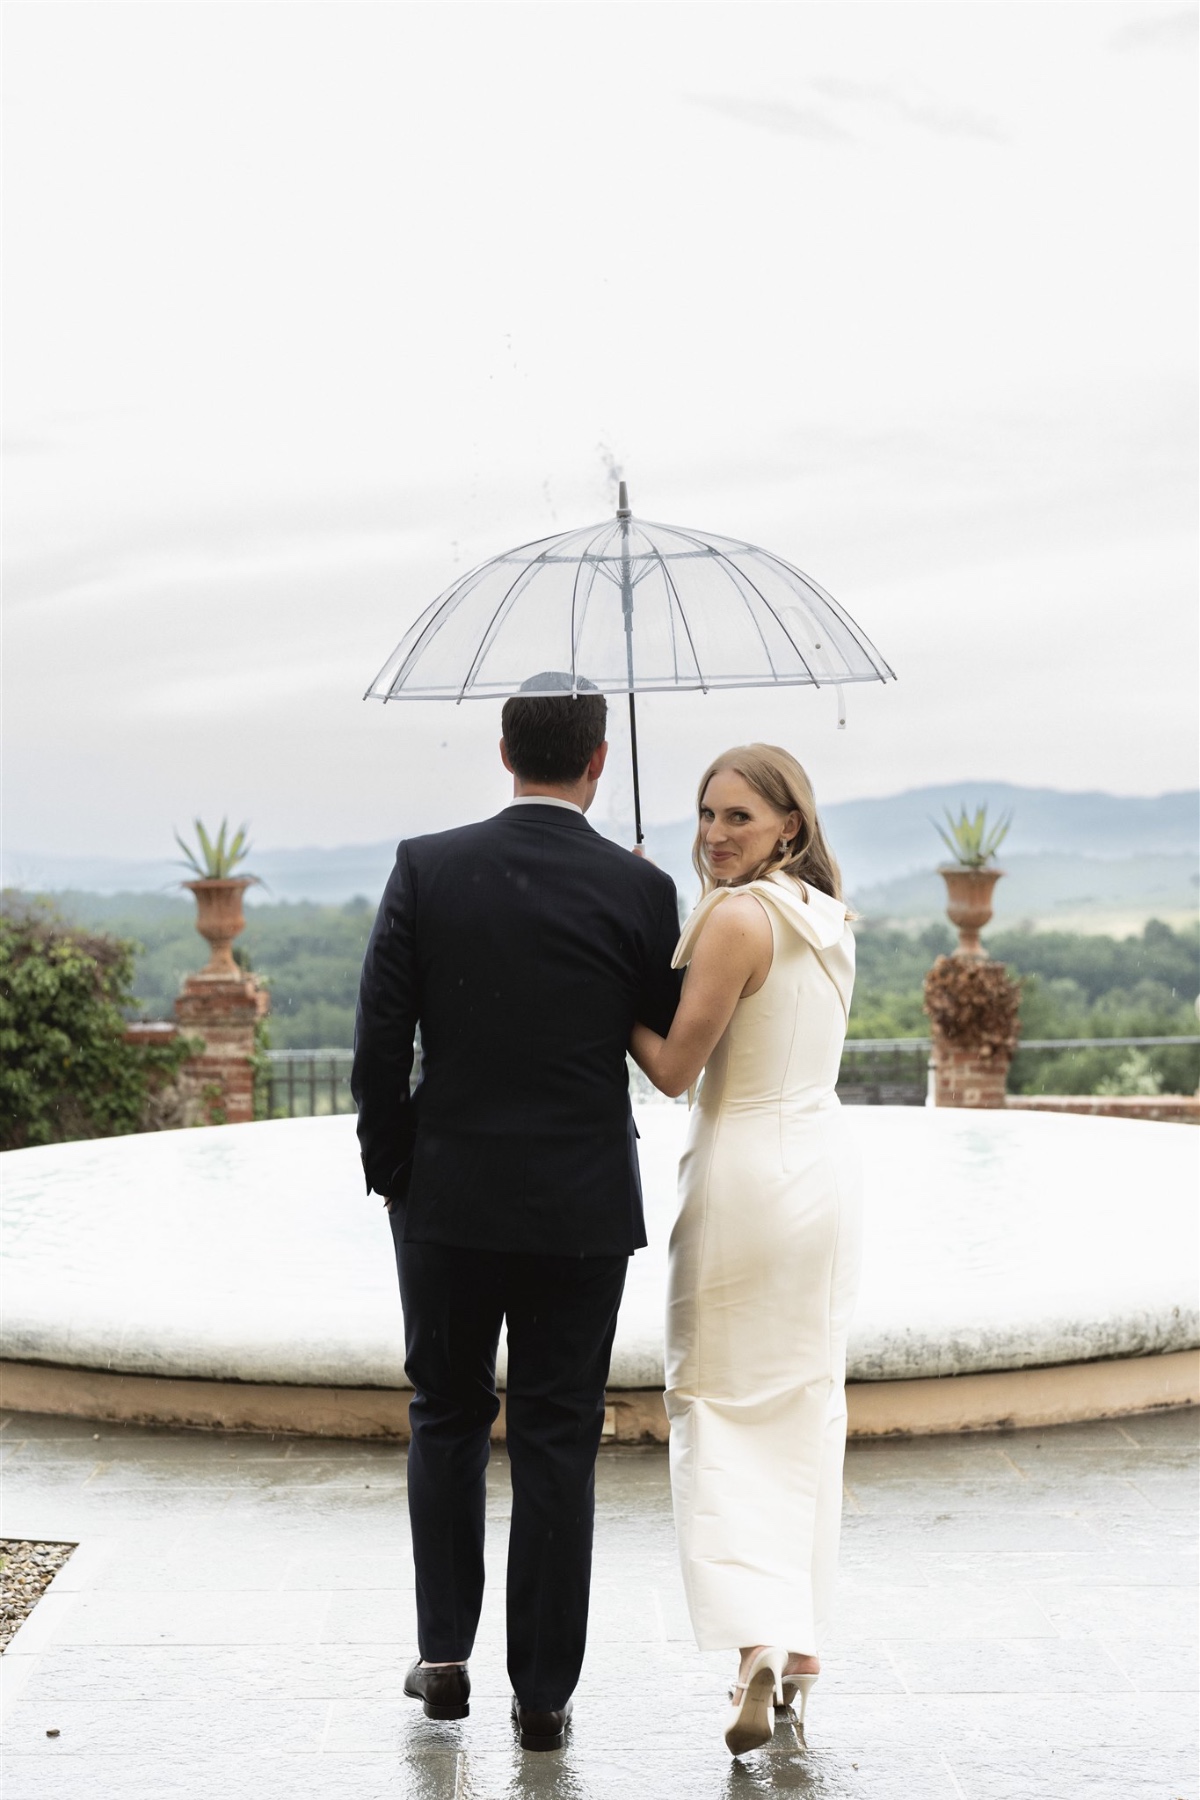 A little rain didn’t dampen this luxury four-day Tuscan wedding